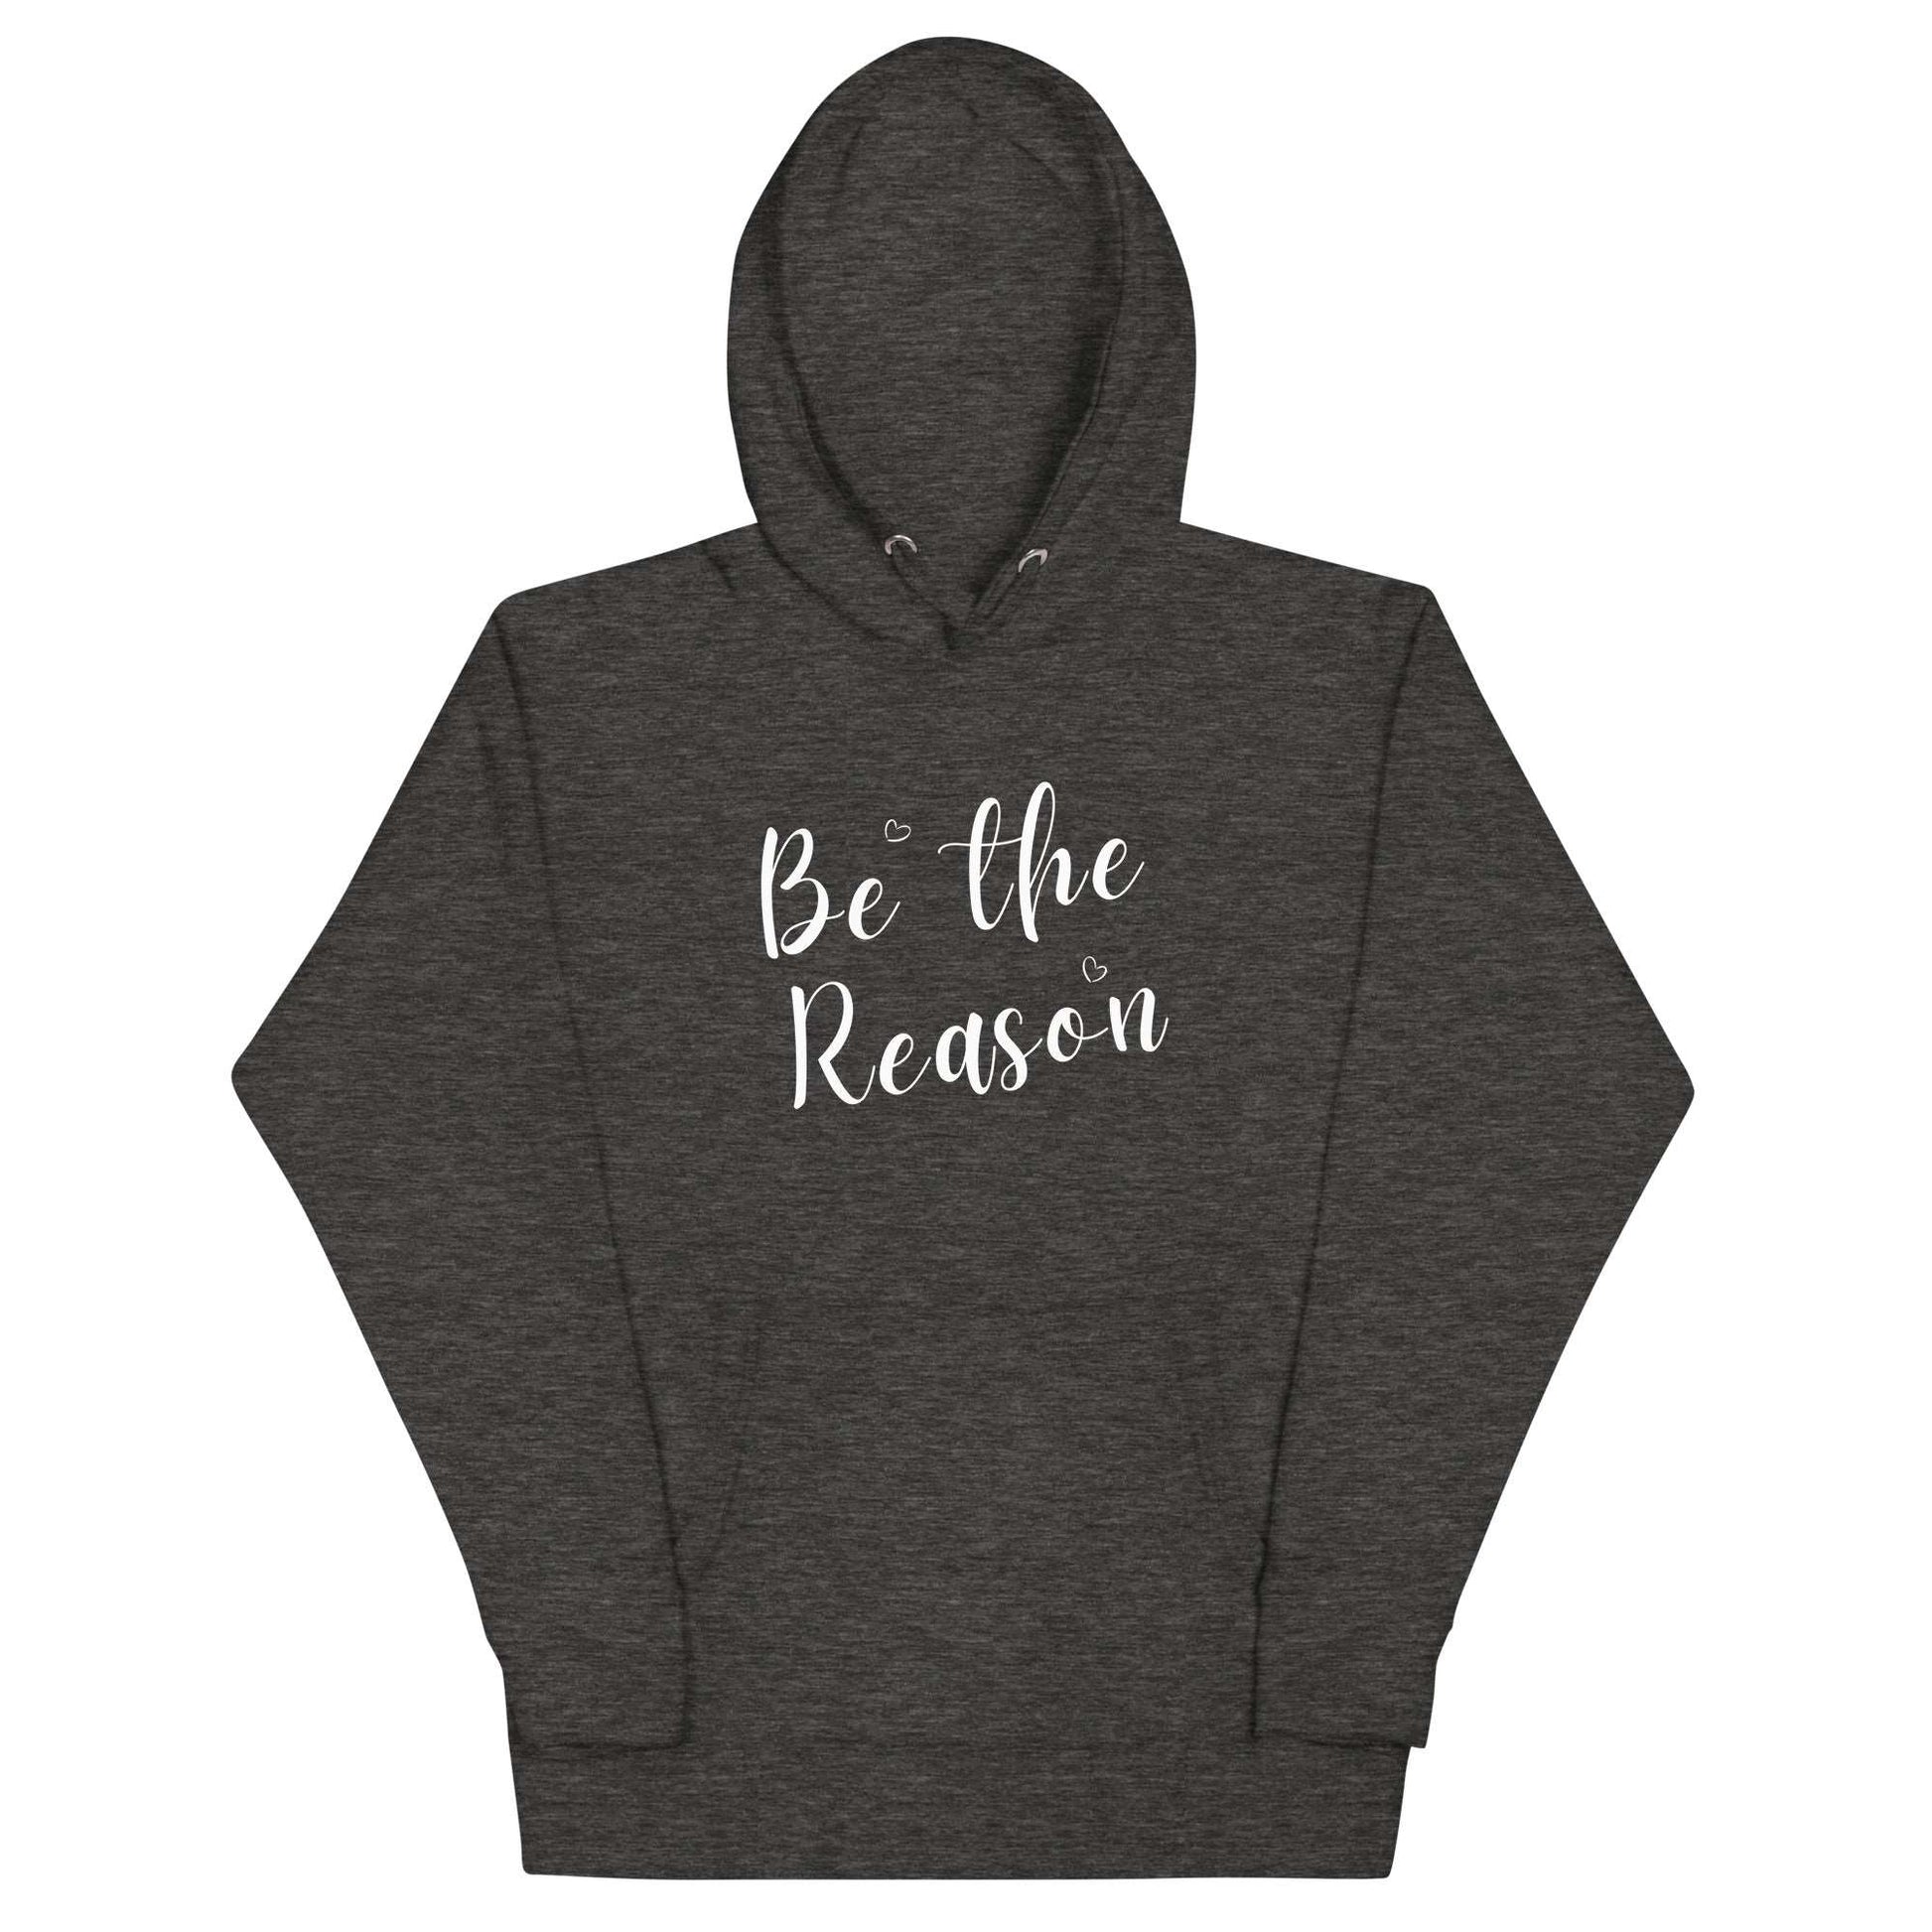 Be the Reason! Inspirational Sweatshirt